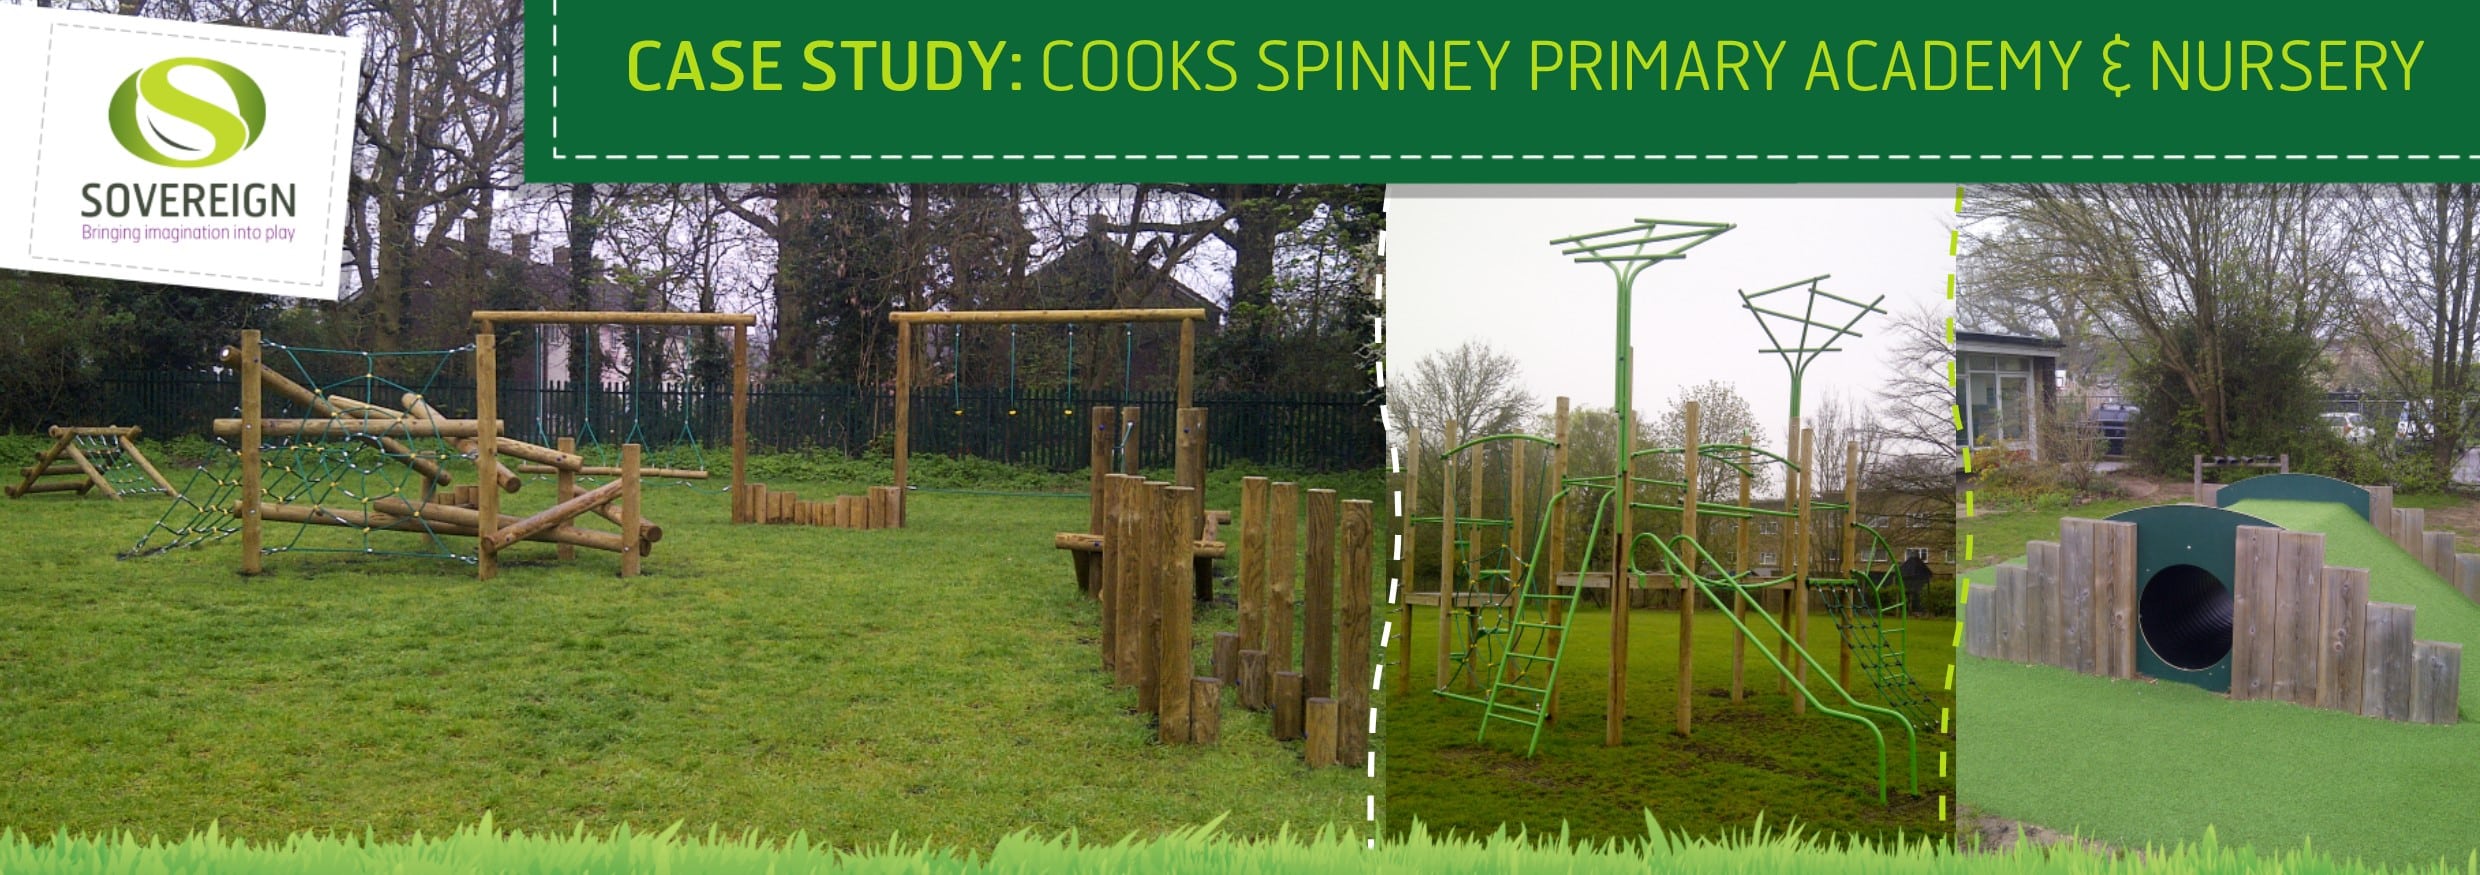 Case Study: Cooks Spinney Primary Academy & Nursery